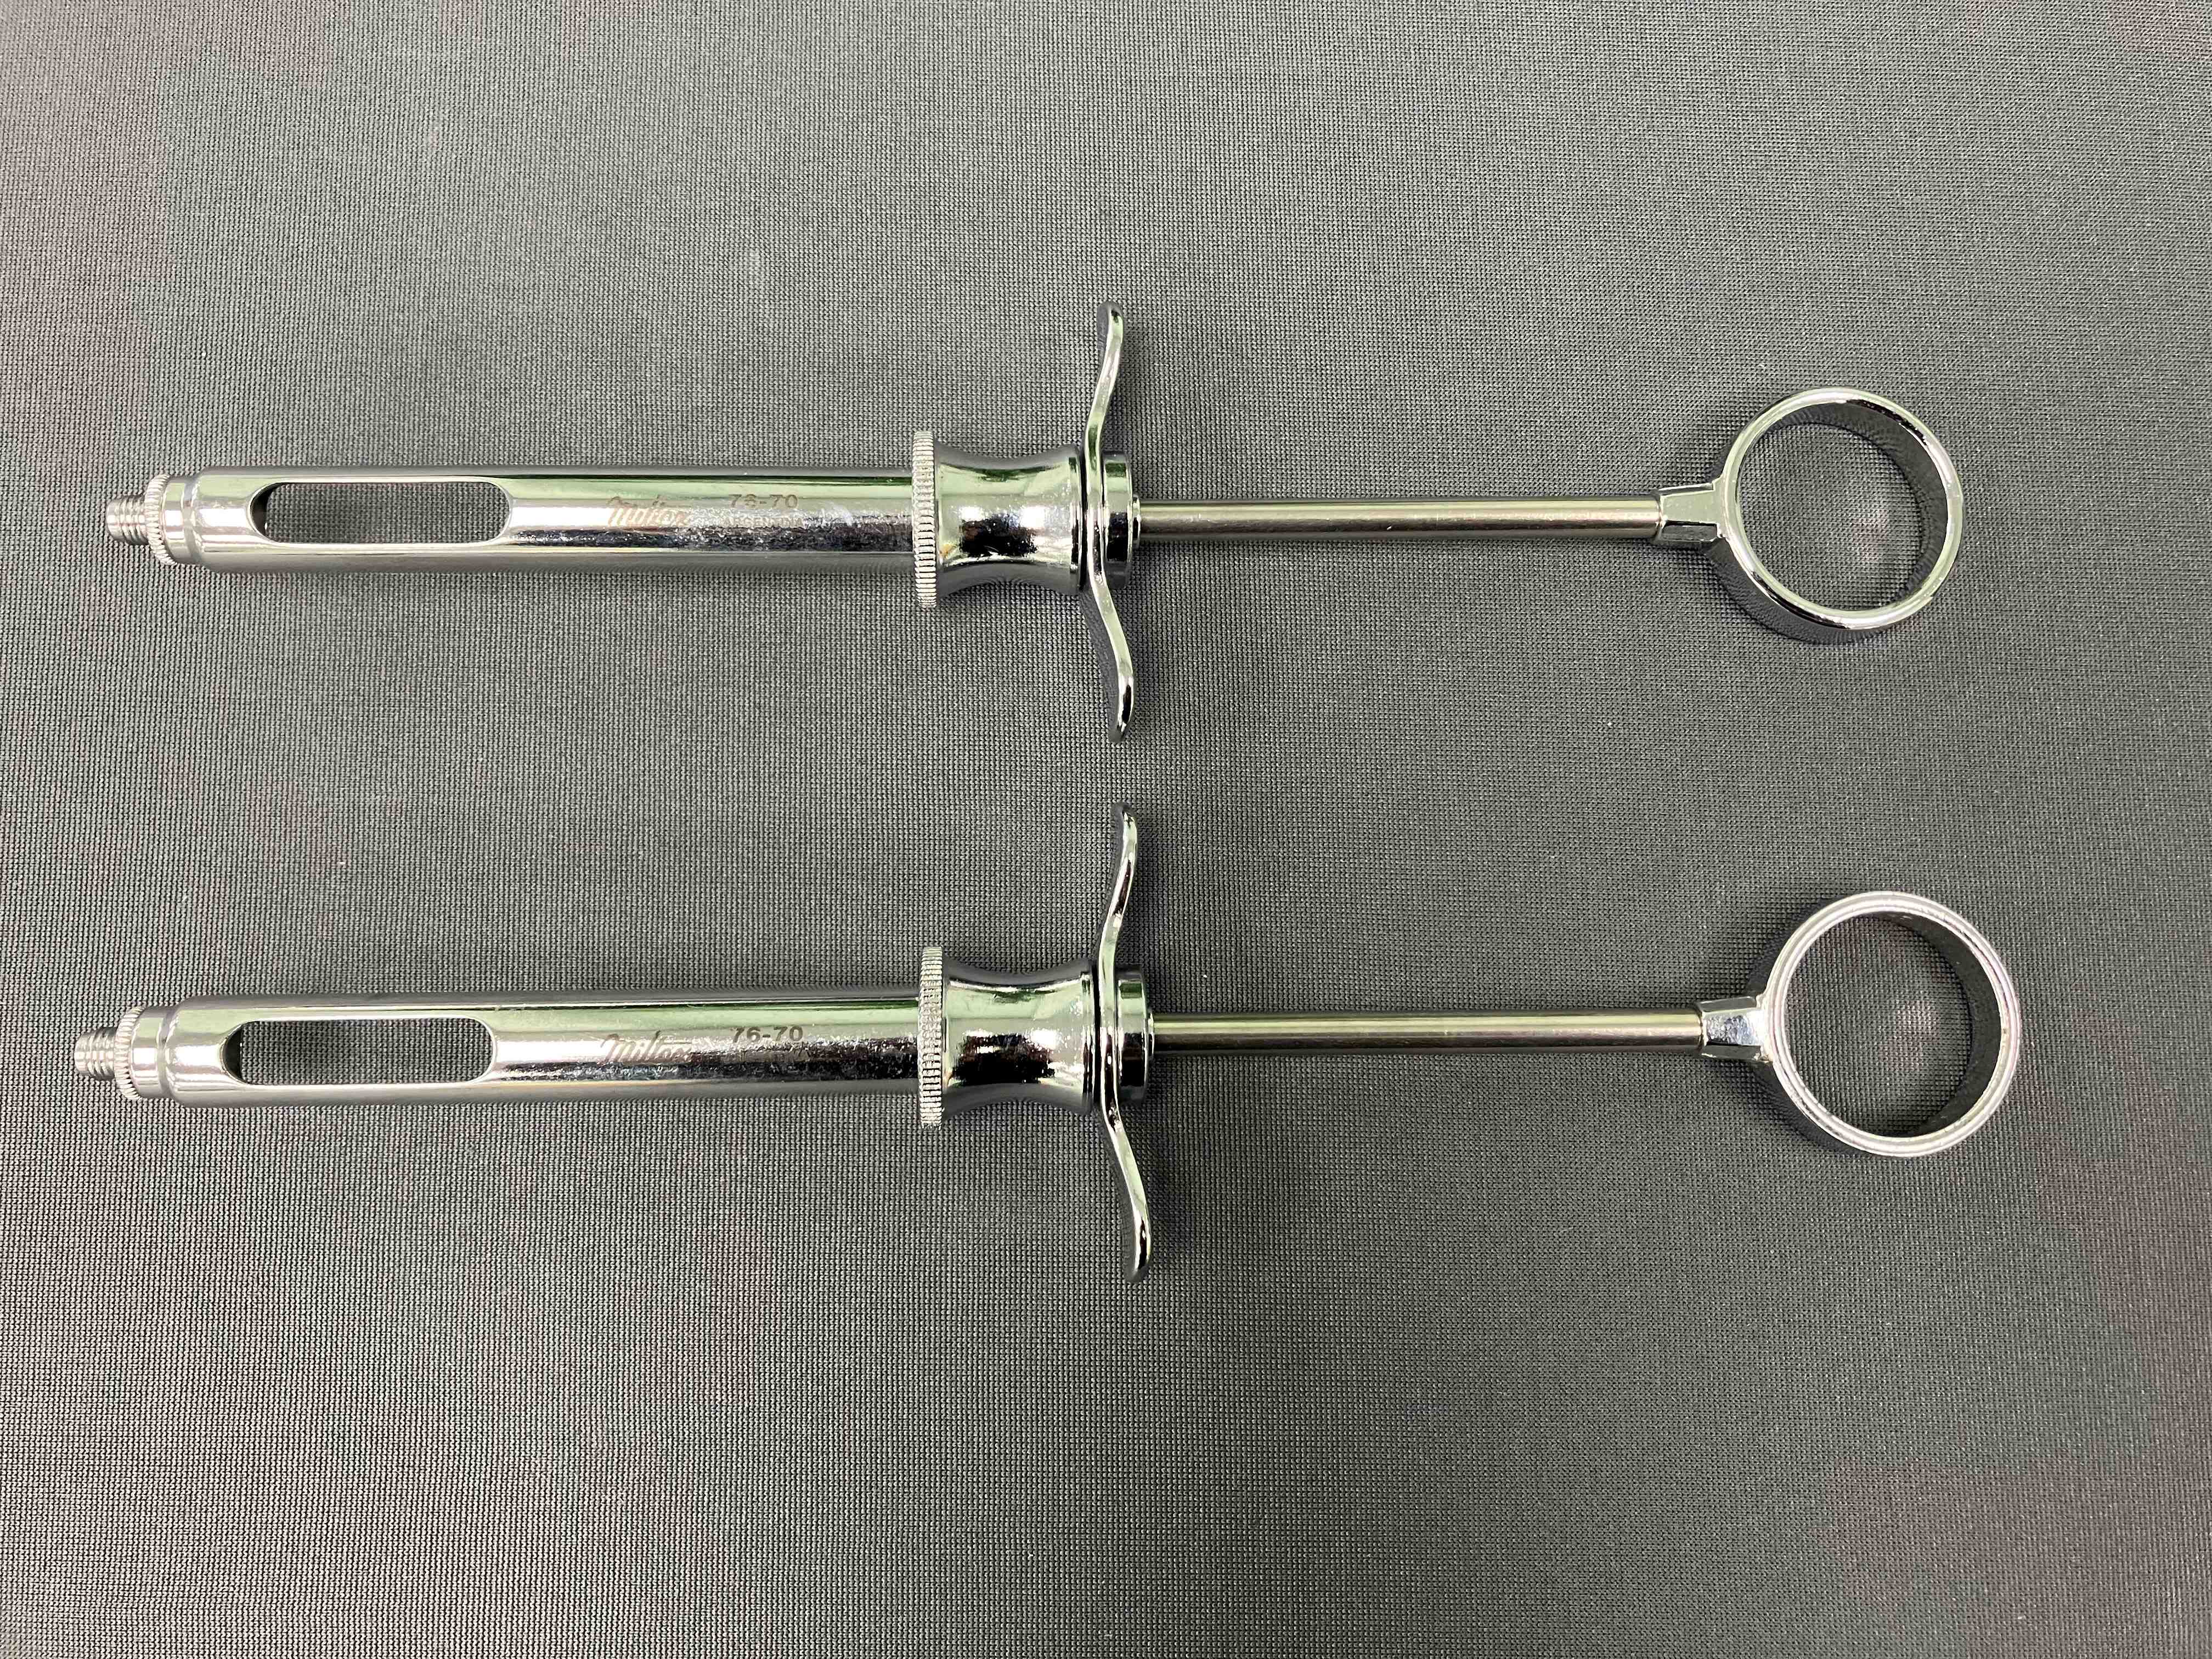 Miltex 76-70 Dental Aspirating Syringe - lot of 2 tools